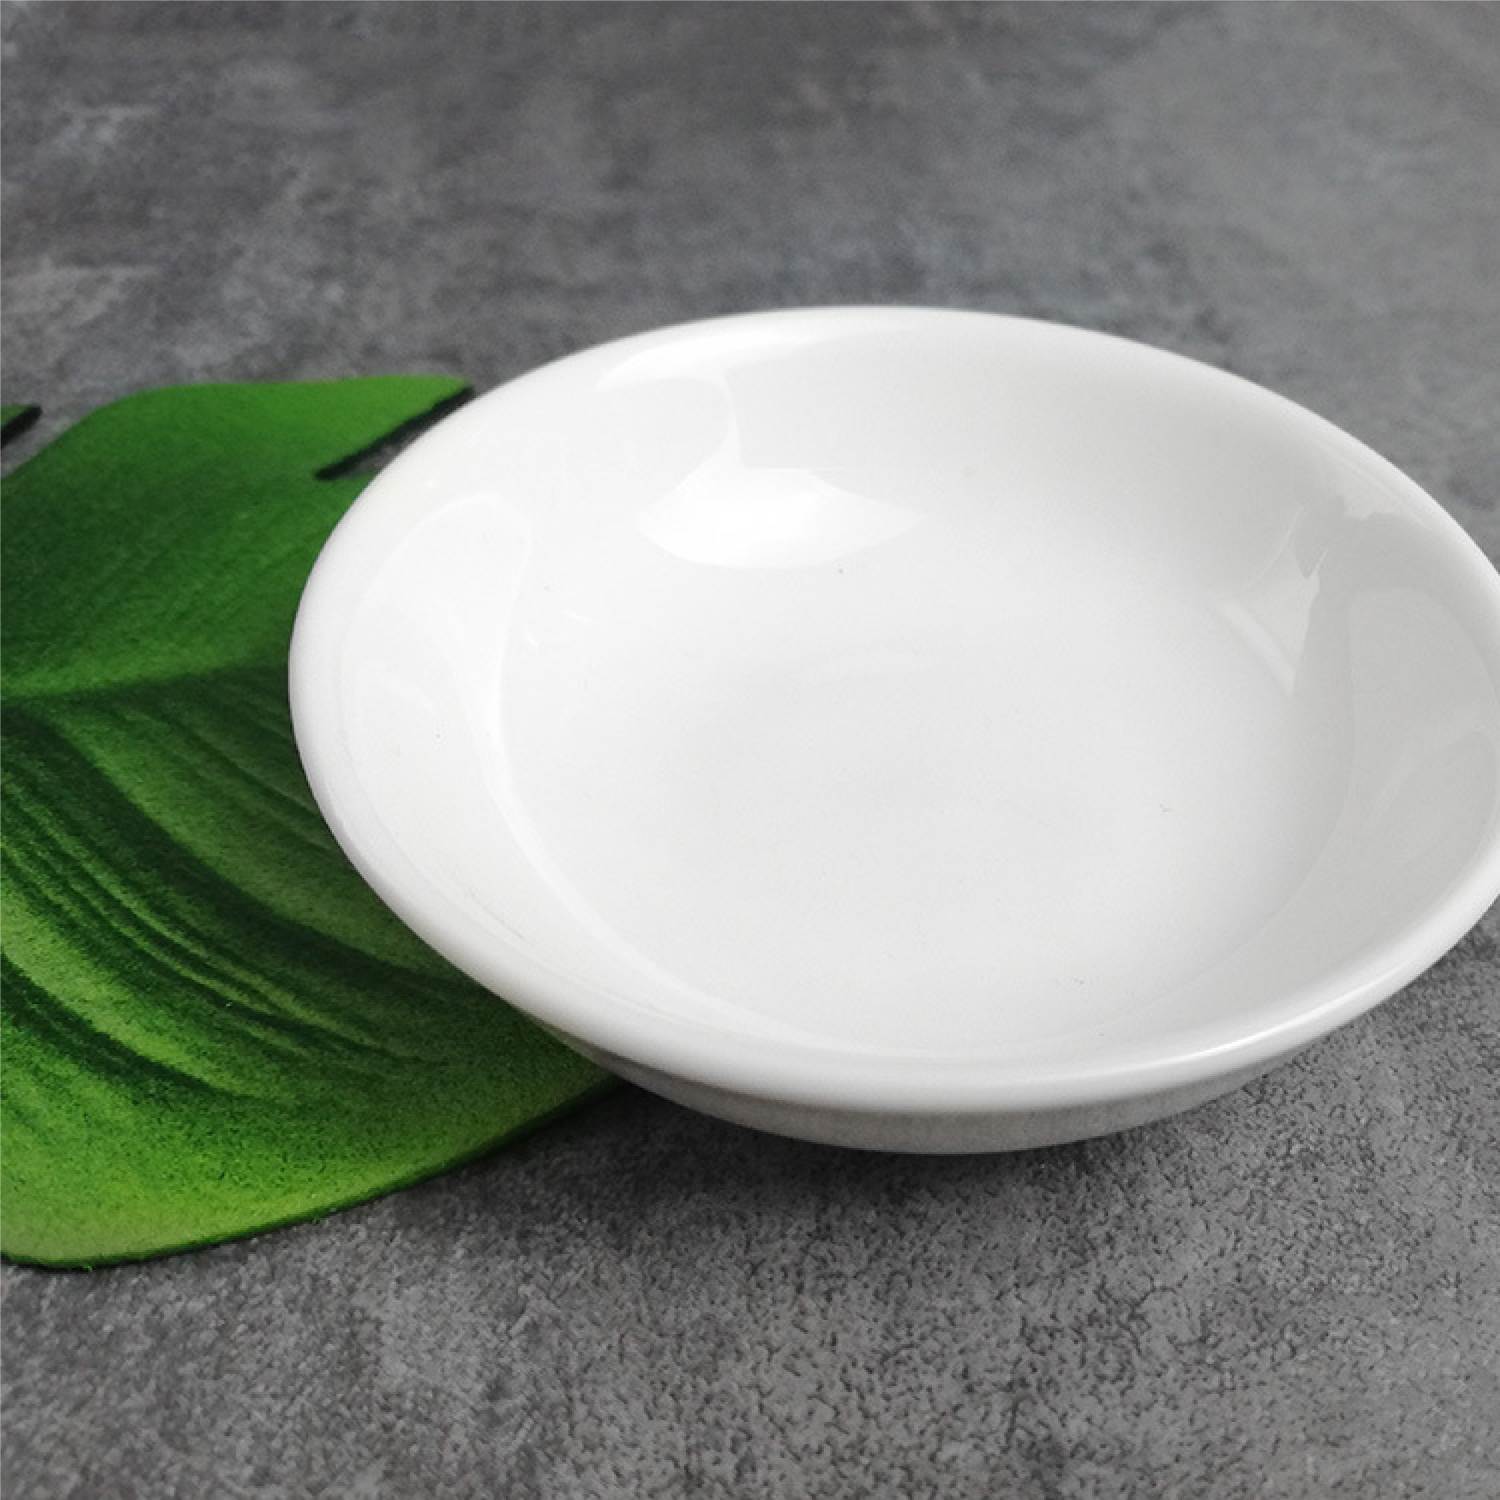 Baralee Simple Plus Small Dish 8.5 Cm (3 3/8")